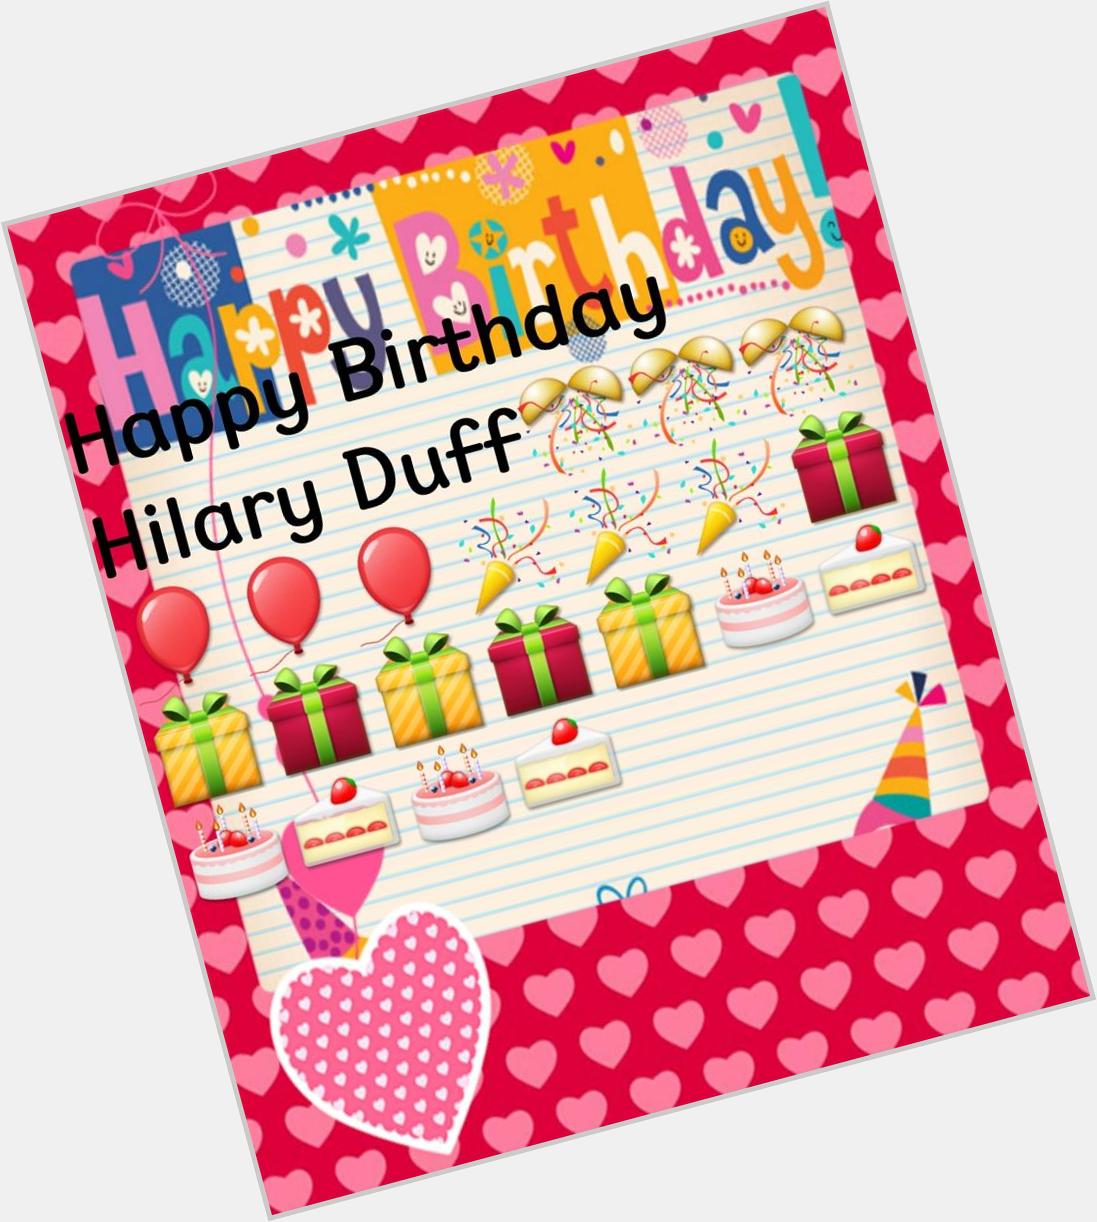 Happy Birthday Hilary Duff               